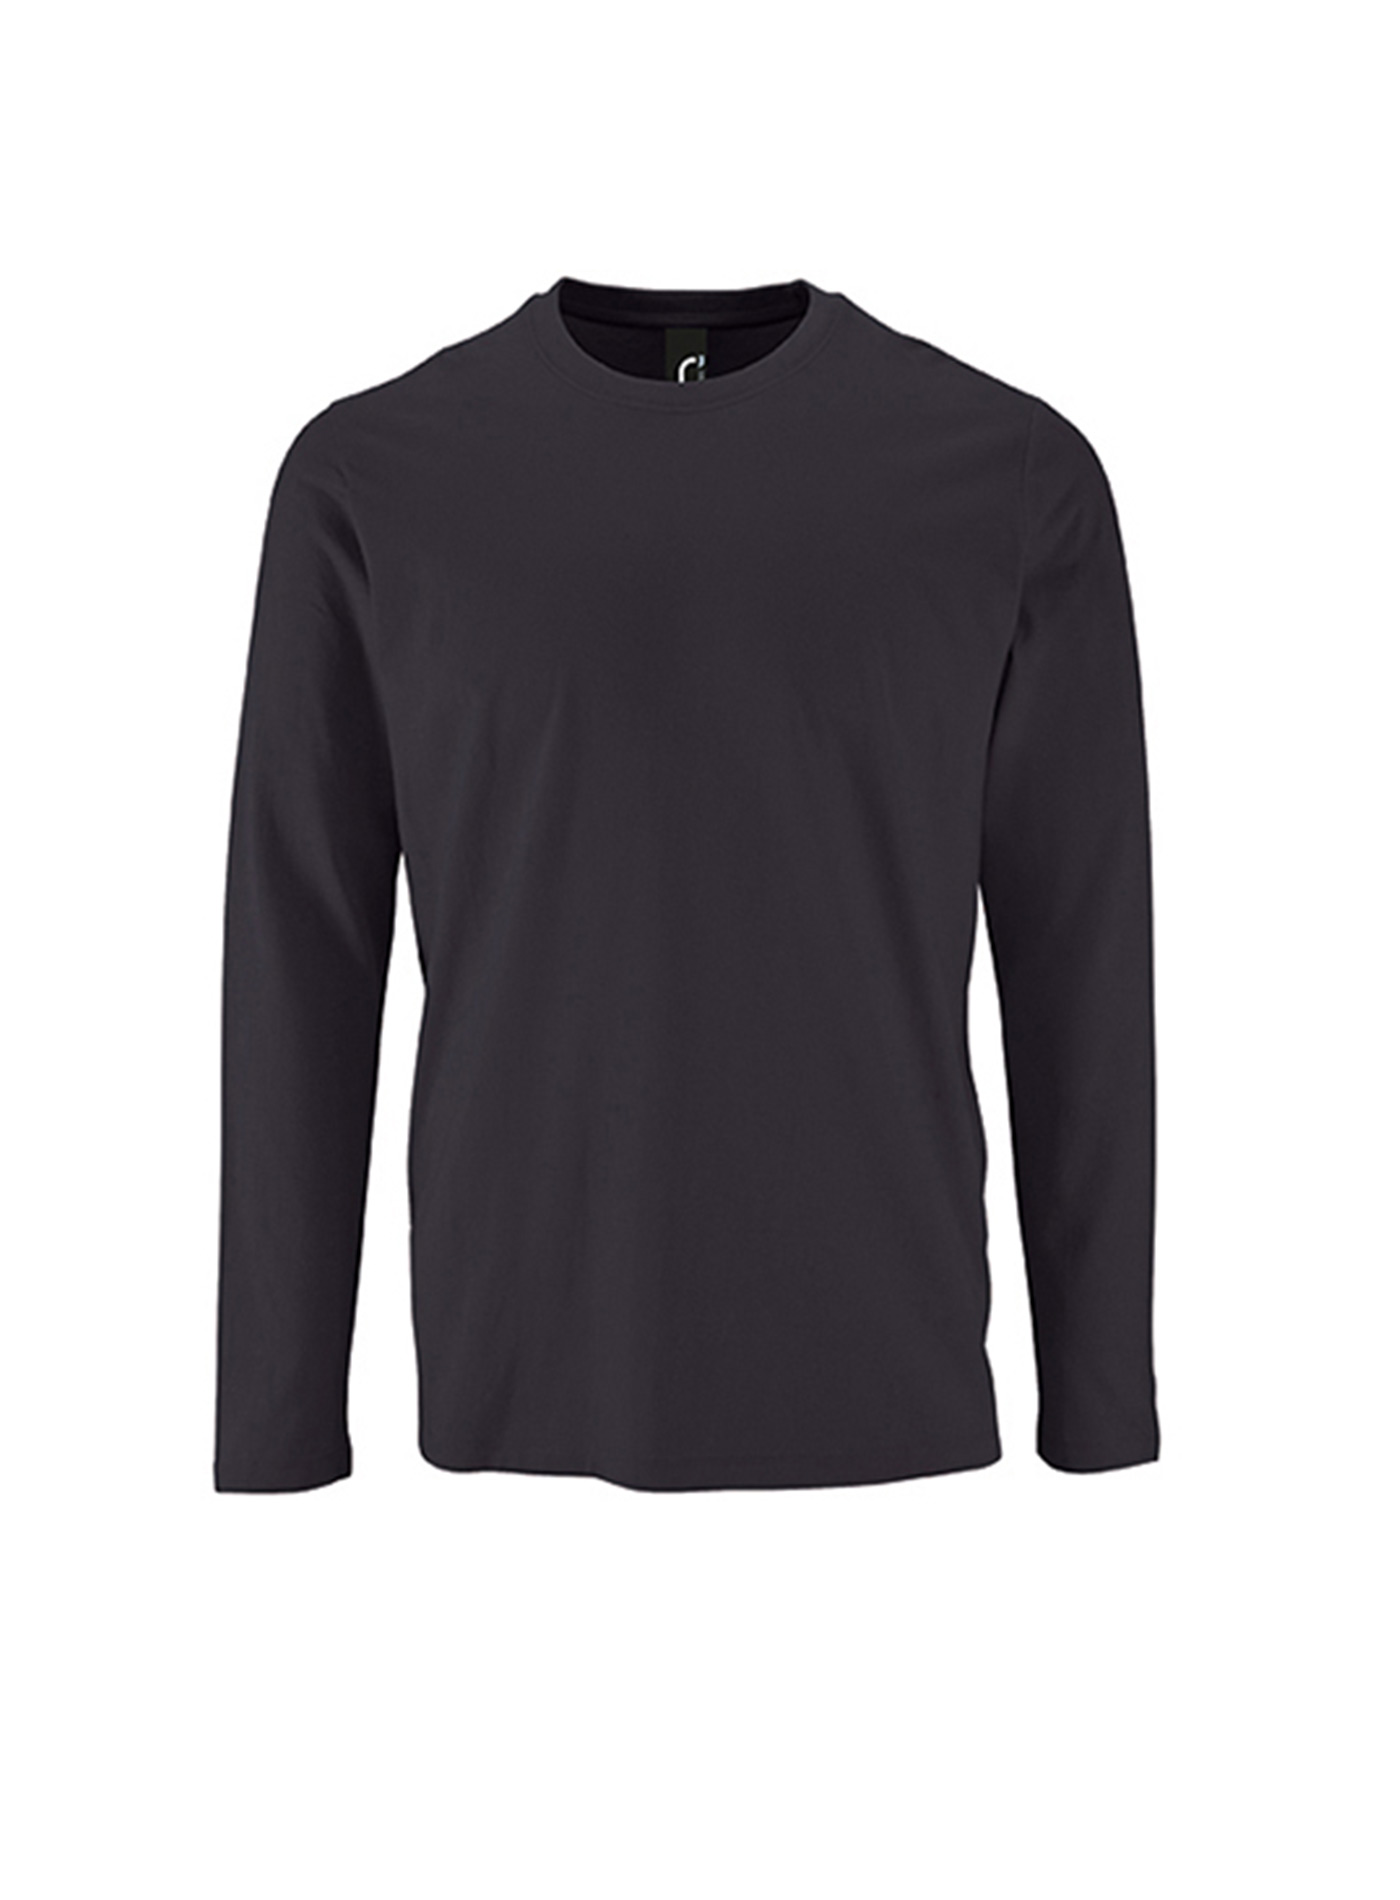 Pánské tričko s dlouhým rukávem SOL´S Imperial - Tmavě šedá XL